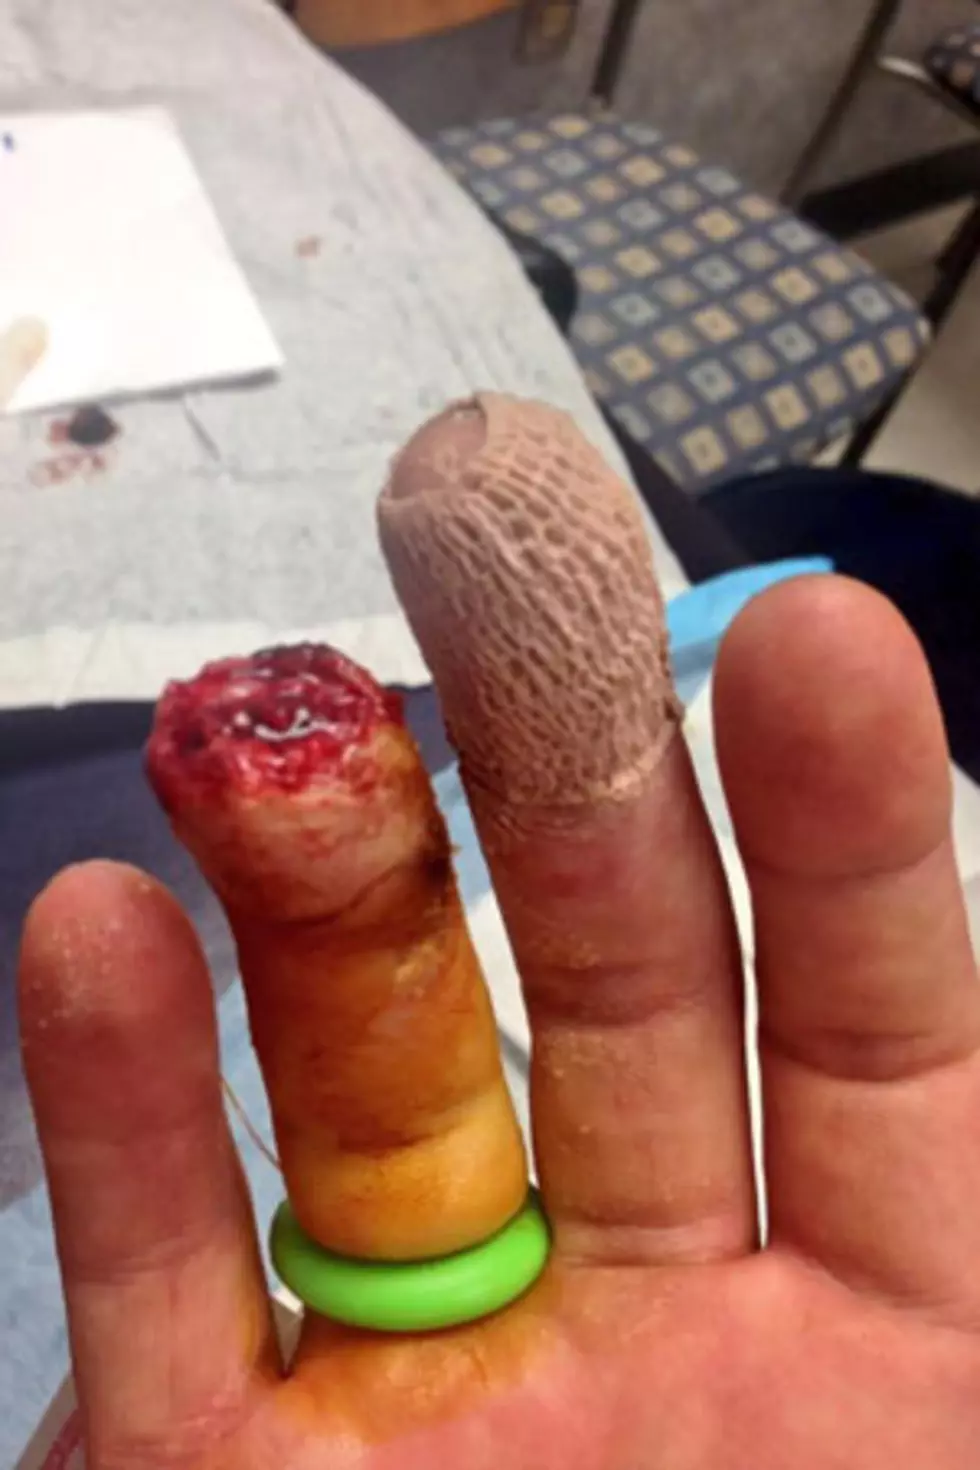 Jake Owen Shares Gruesome Photo of Severed Finger [NSFW]